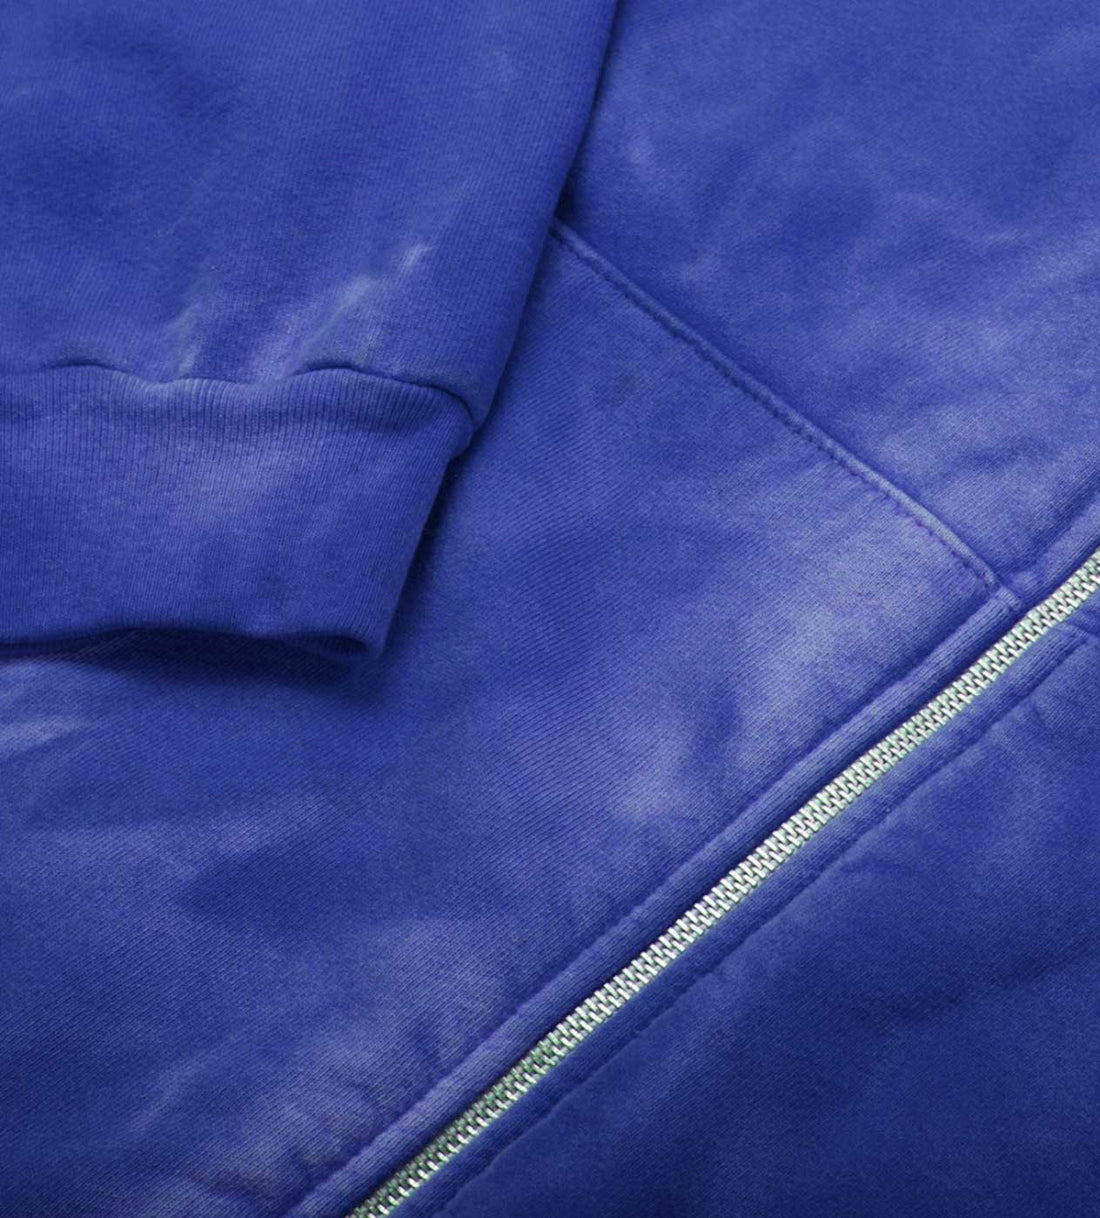 Product Image Of Pieces Sun Faded Zip Up Sweatshirt Midnight Navy Zipper View